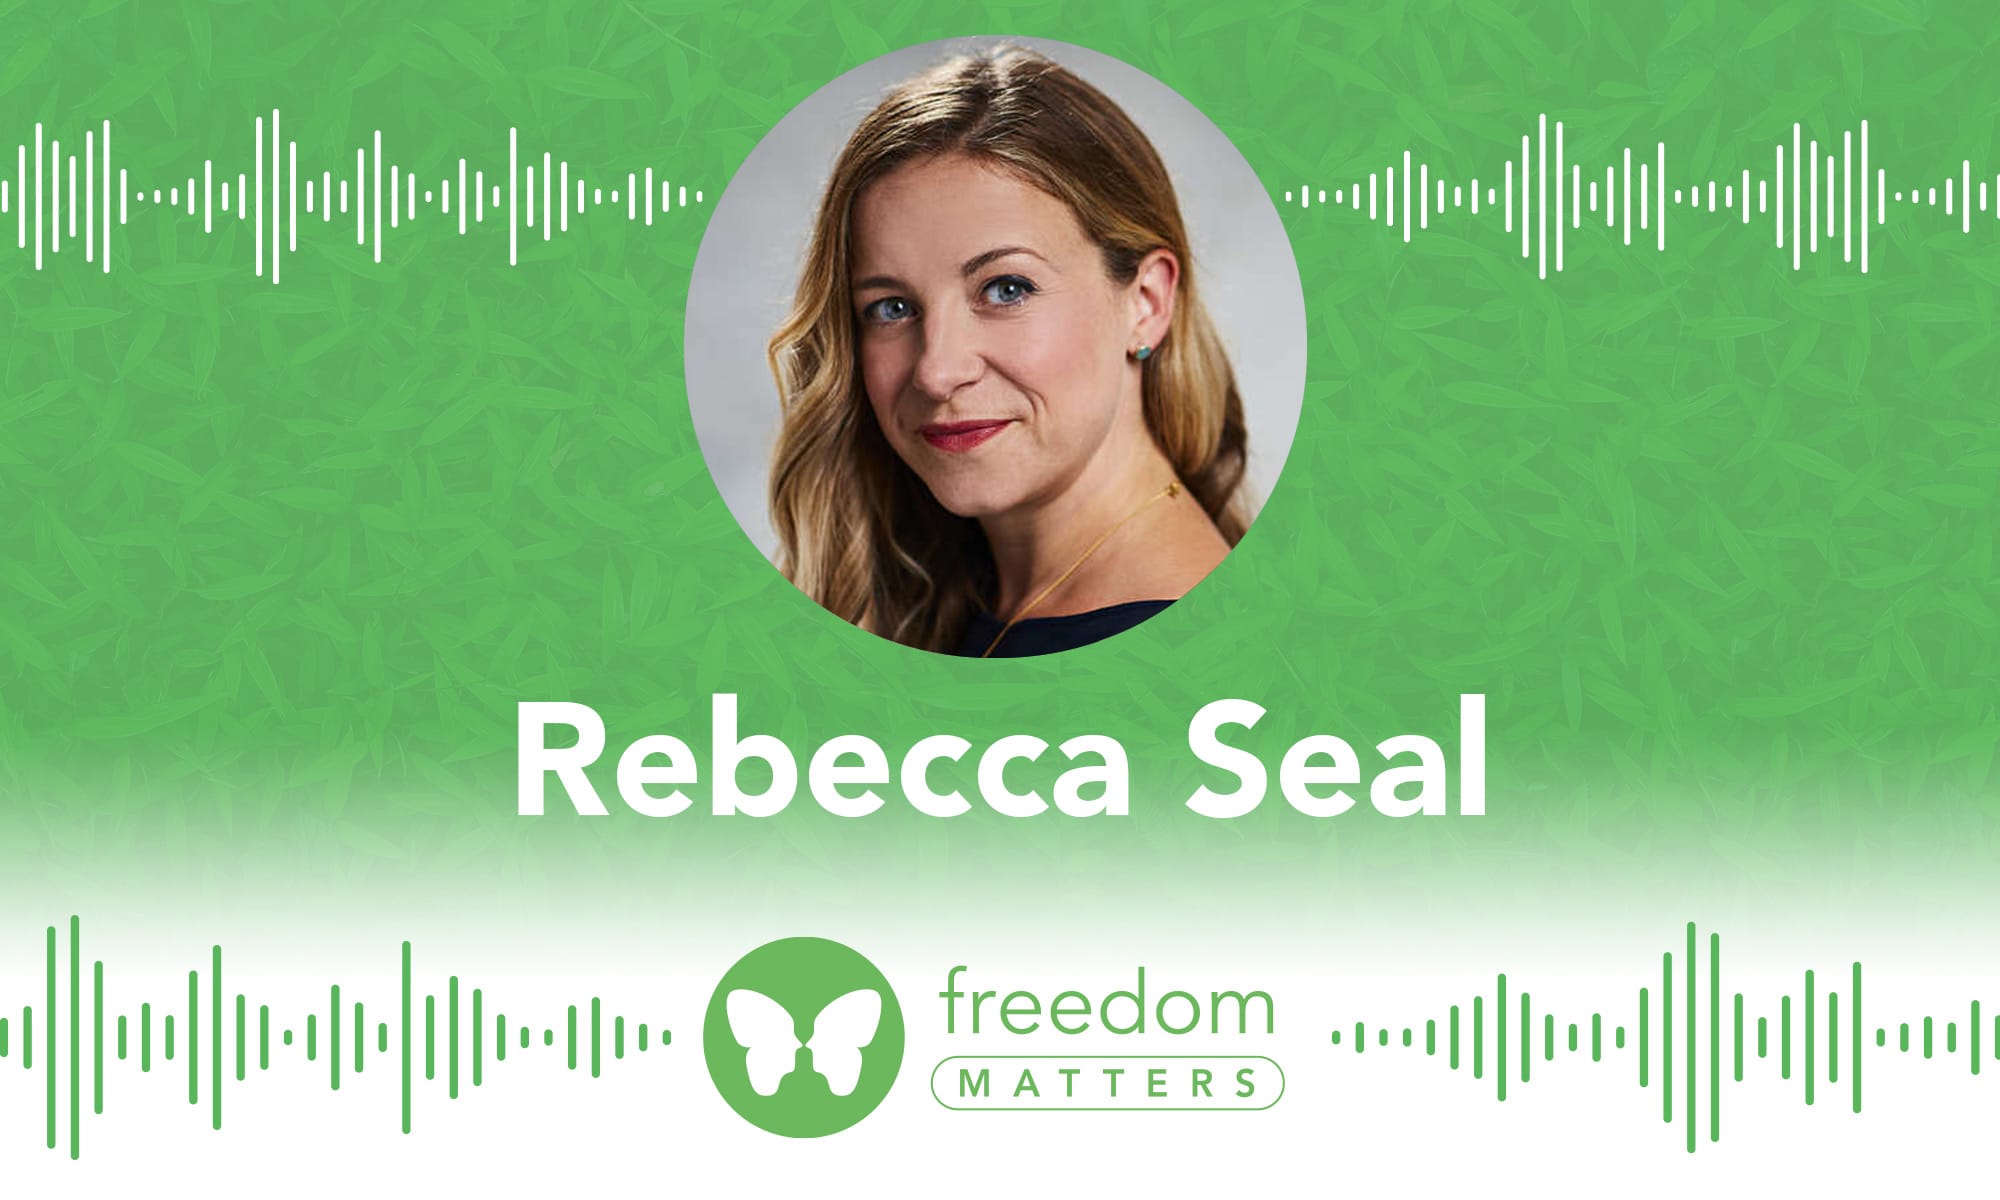 Rebecca Seal Freedom Matters